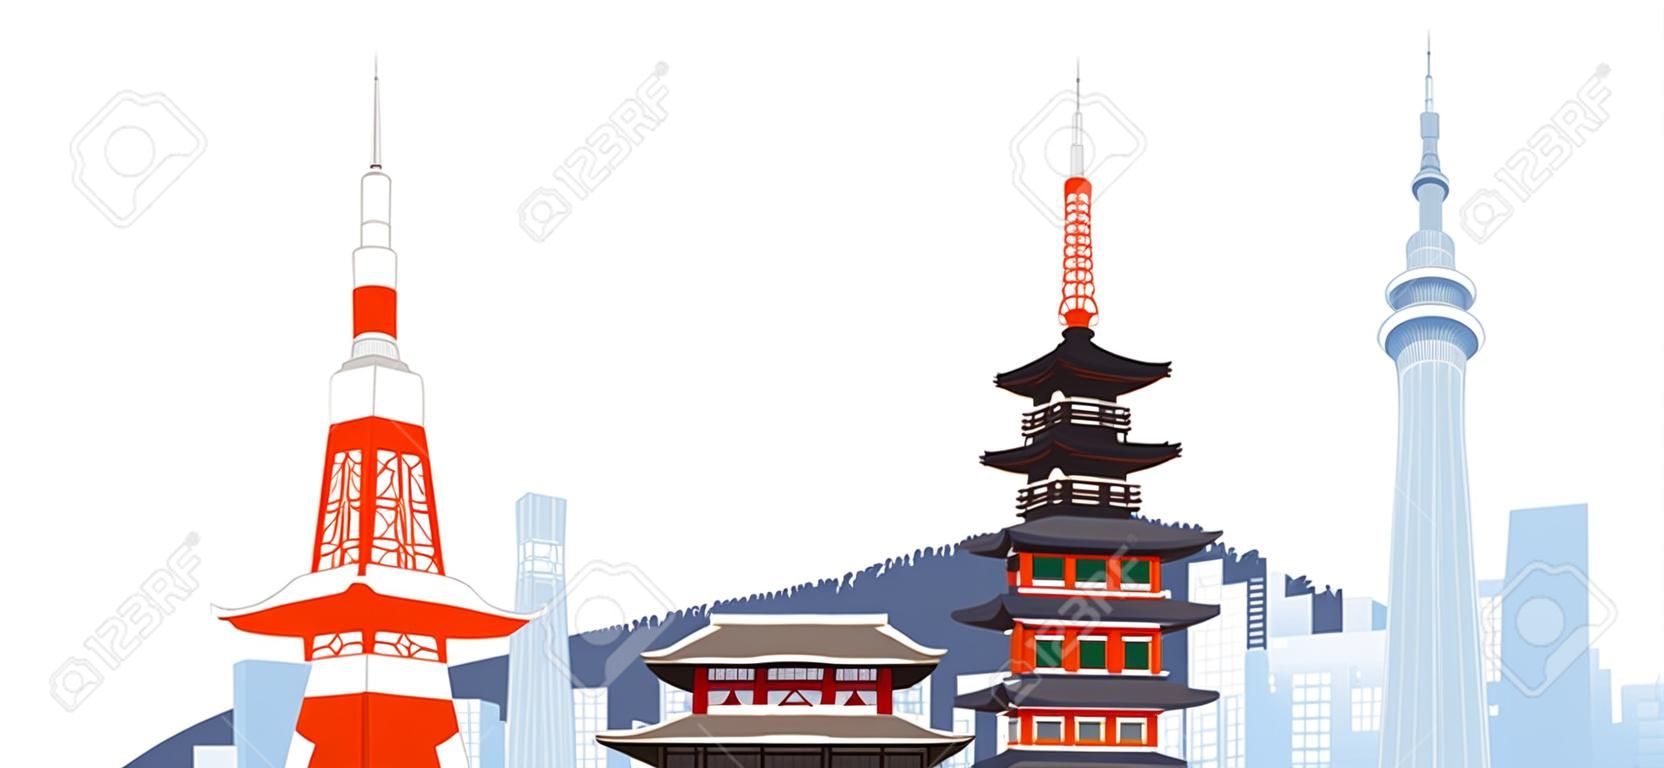 Illustration of Tokyo city in Japan